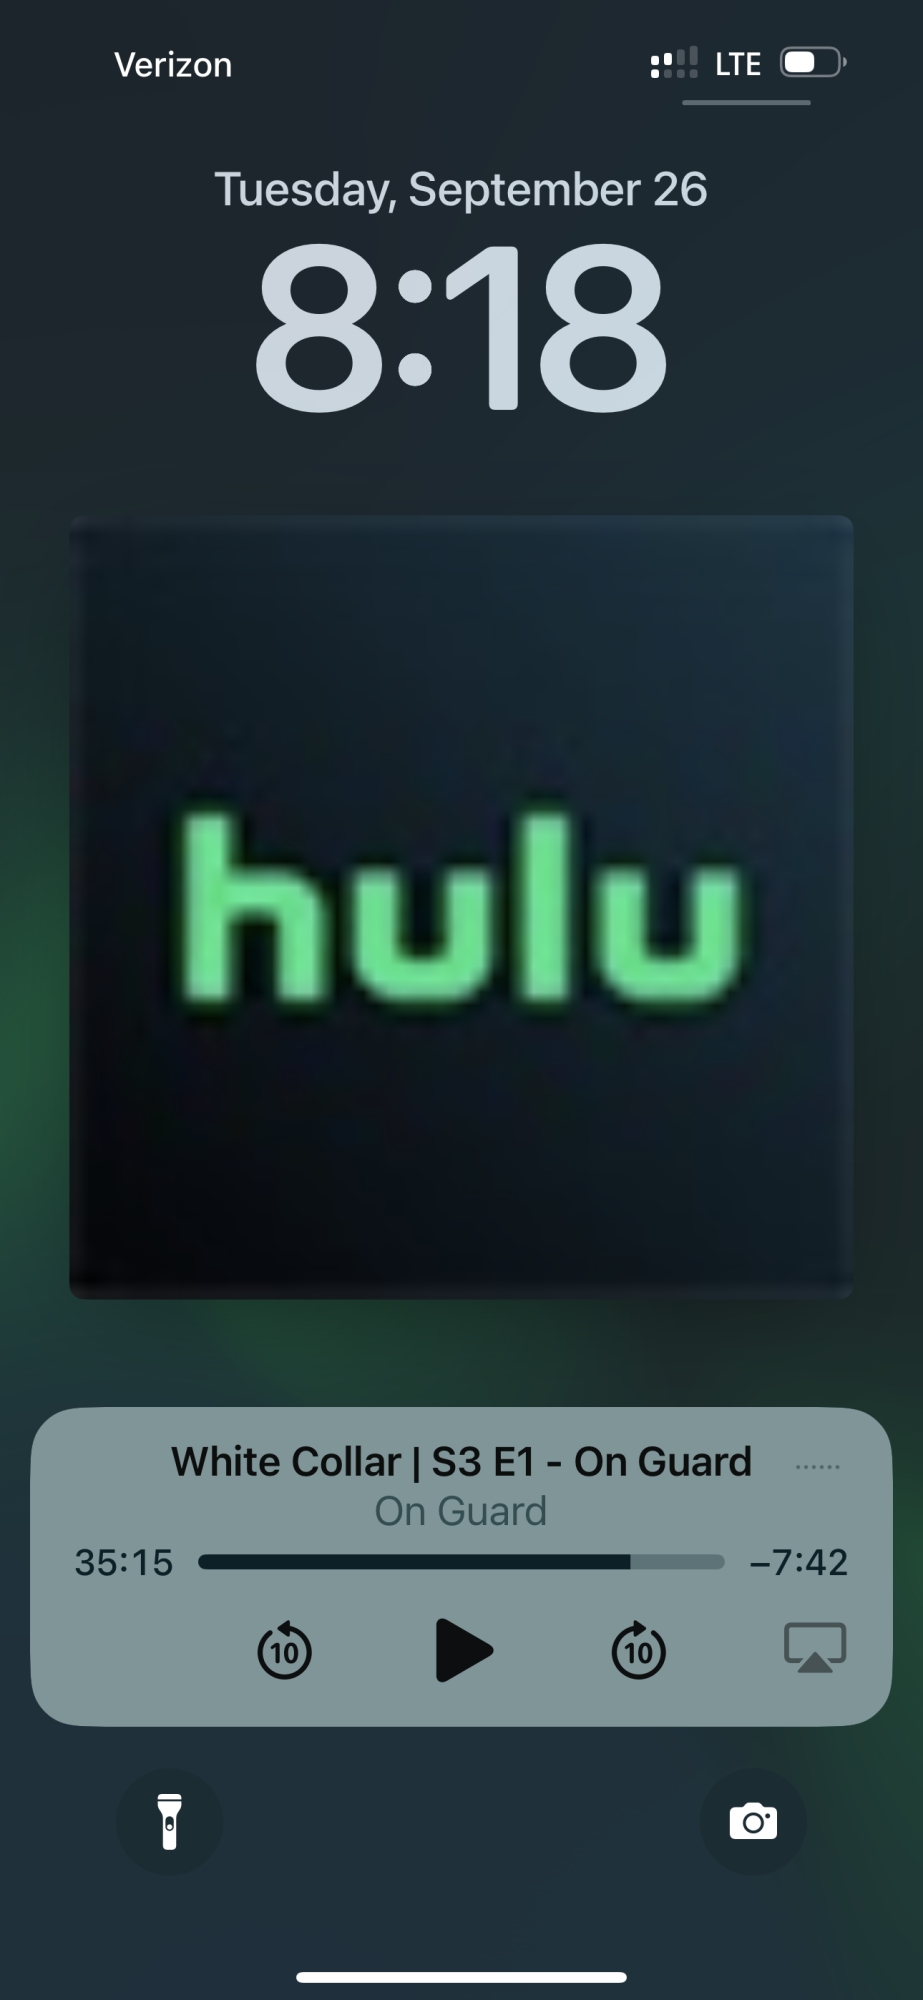 Coming to Hulu - Forums 